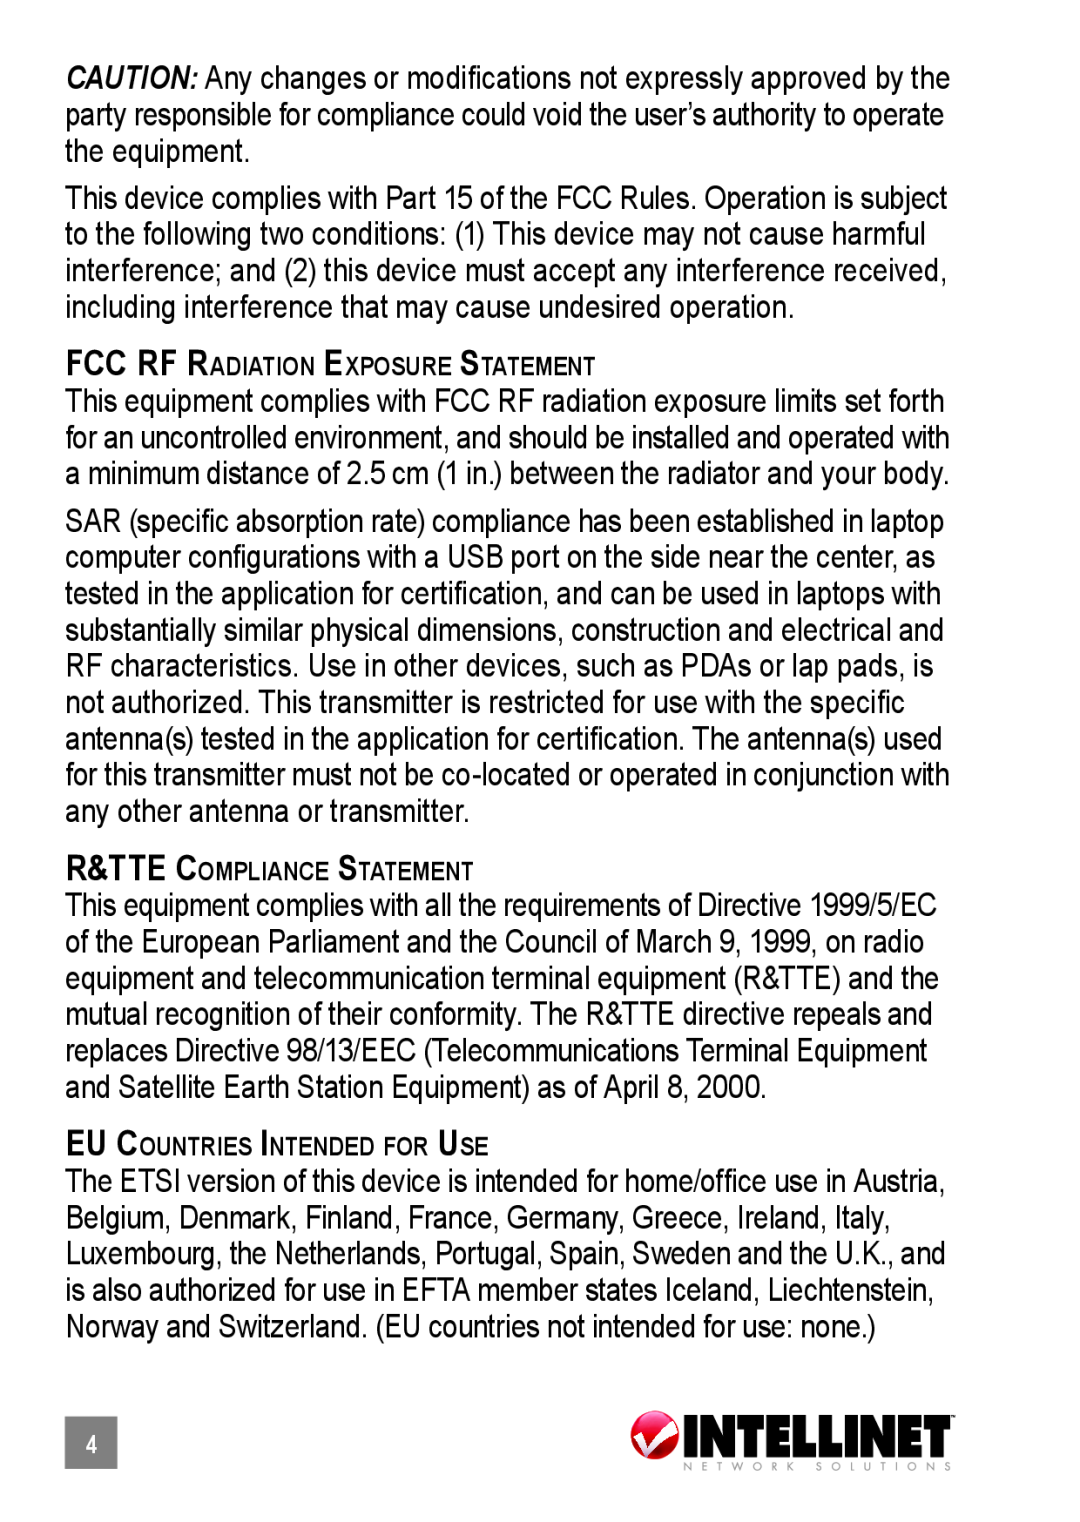 Intellinet Network Solutions 524438 user manual FCC RF Radiation Exposure Statement, R&TTE Compliance Statement 